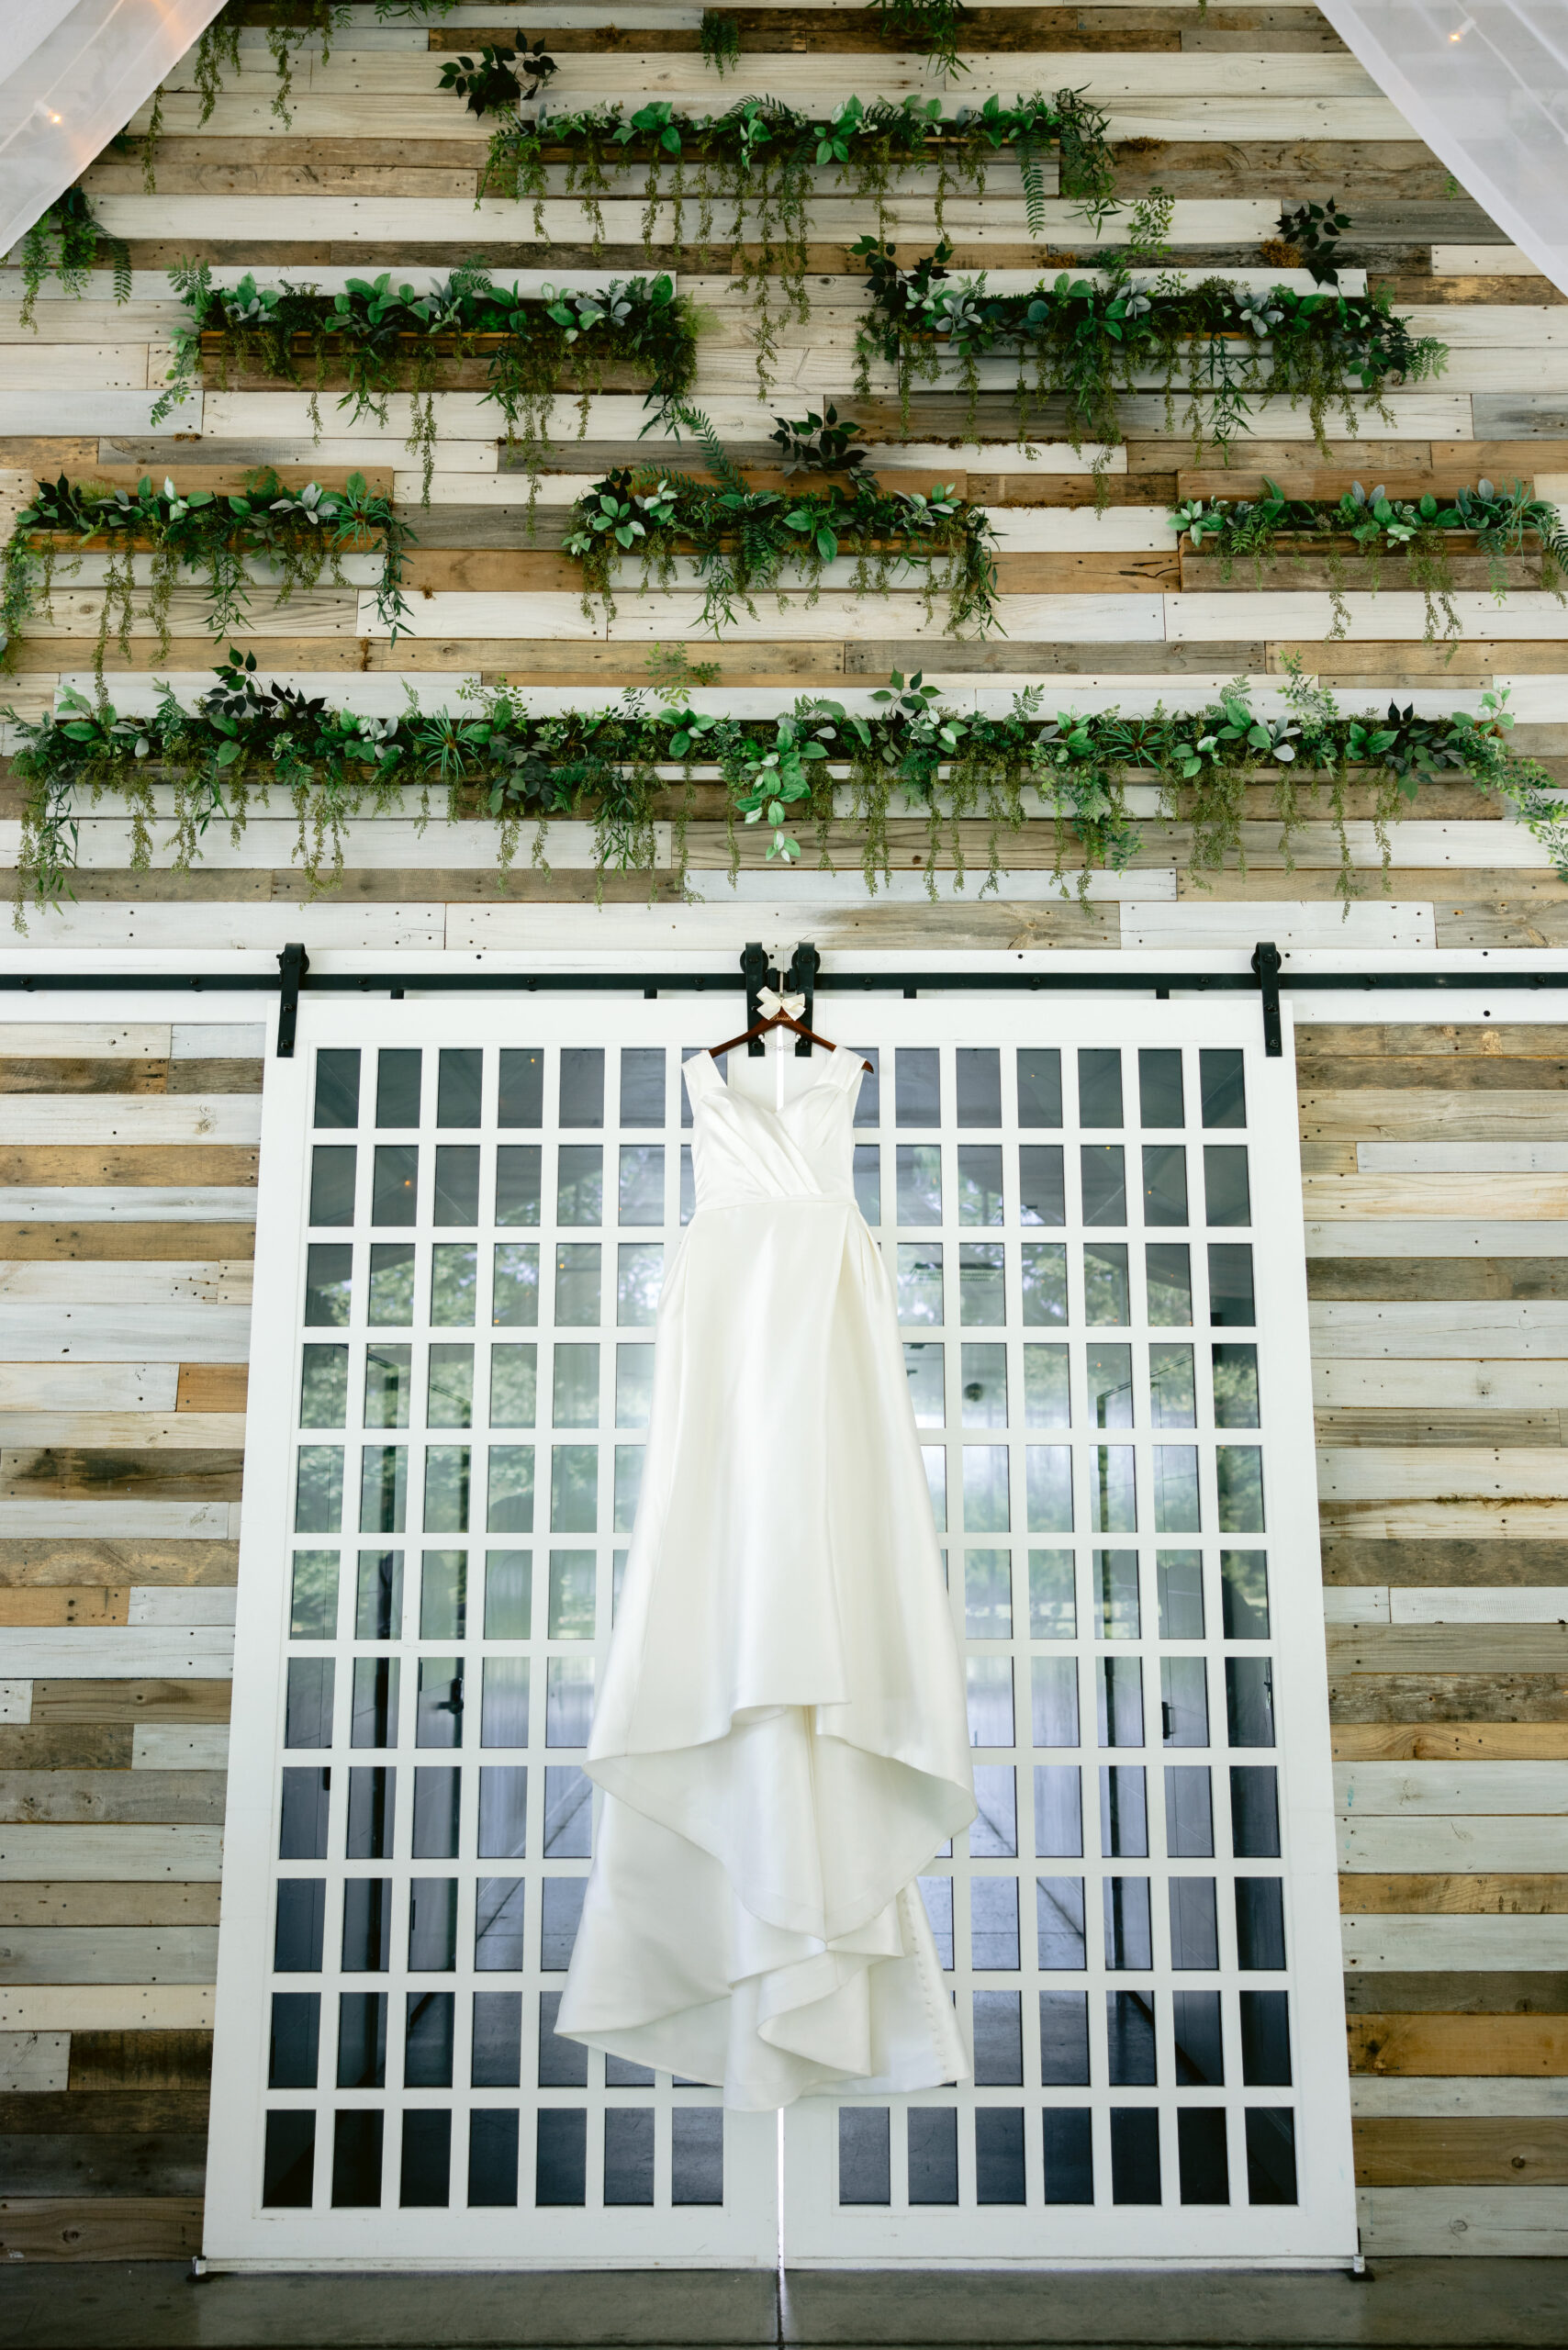 Greenhouse Two Rivers wedding dress photographed by Tatyana Zadorin Photography